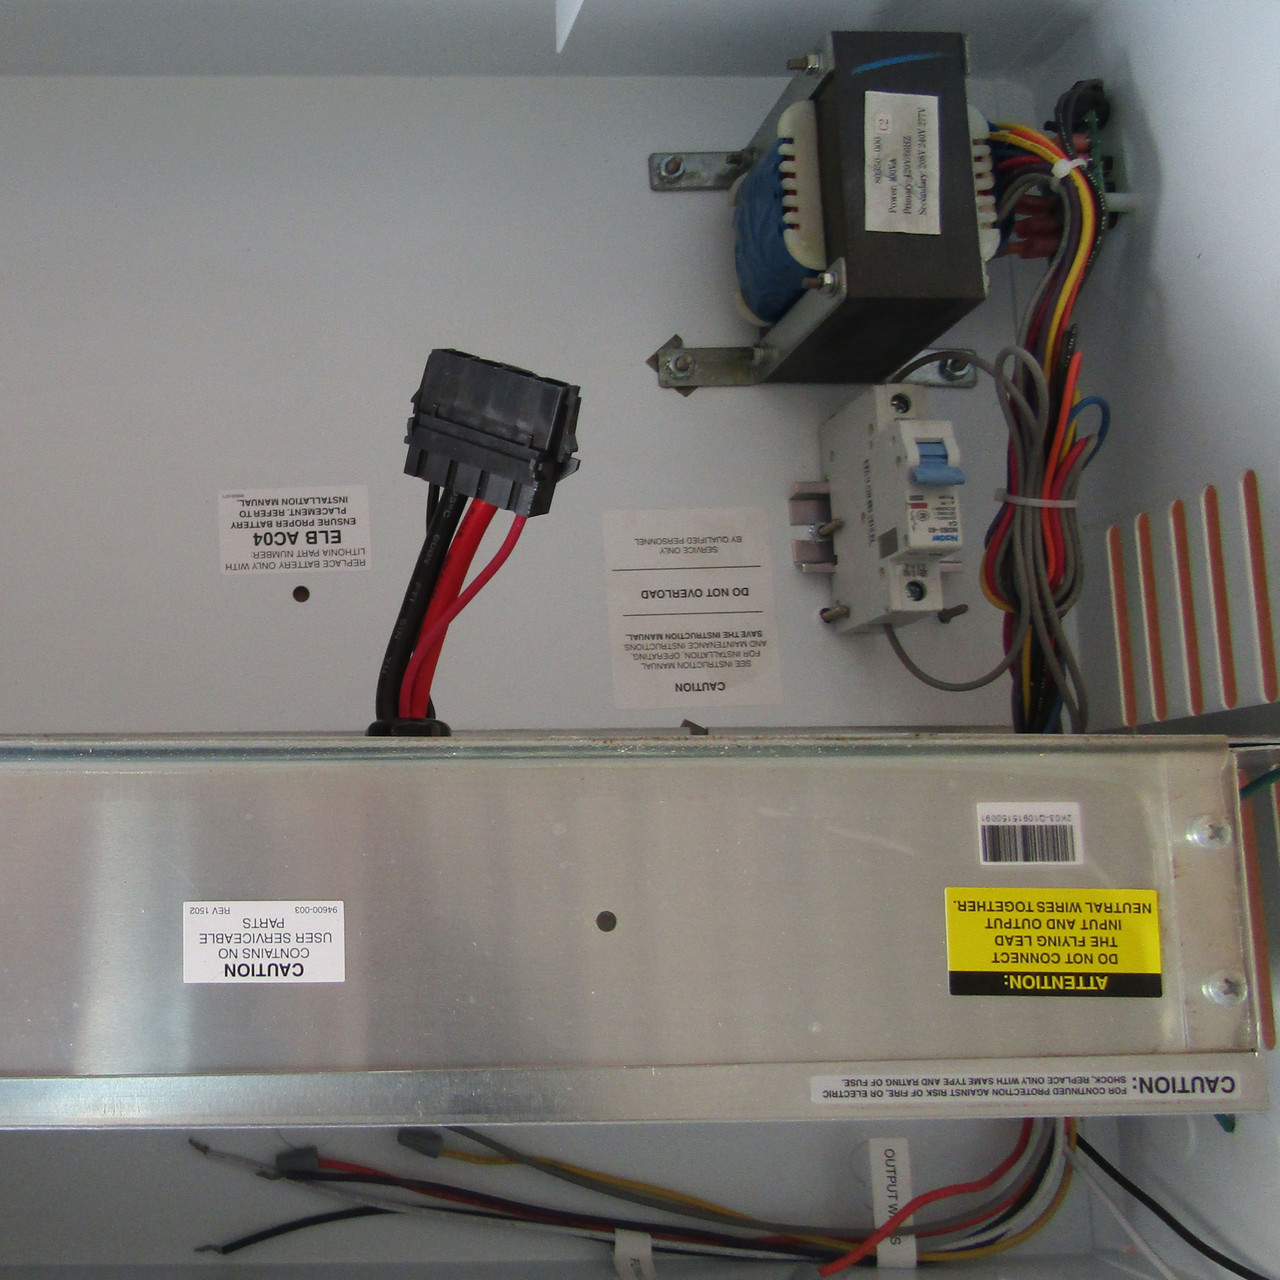 Lithonia Lighting EAC ISSM 375 120/277 SM Interruptible AC Inverter System - New